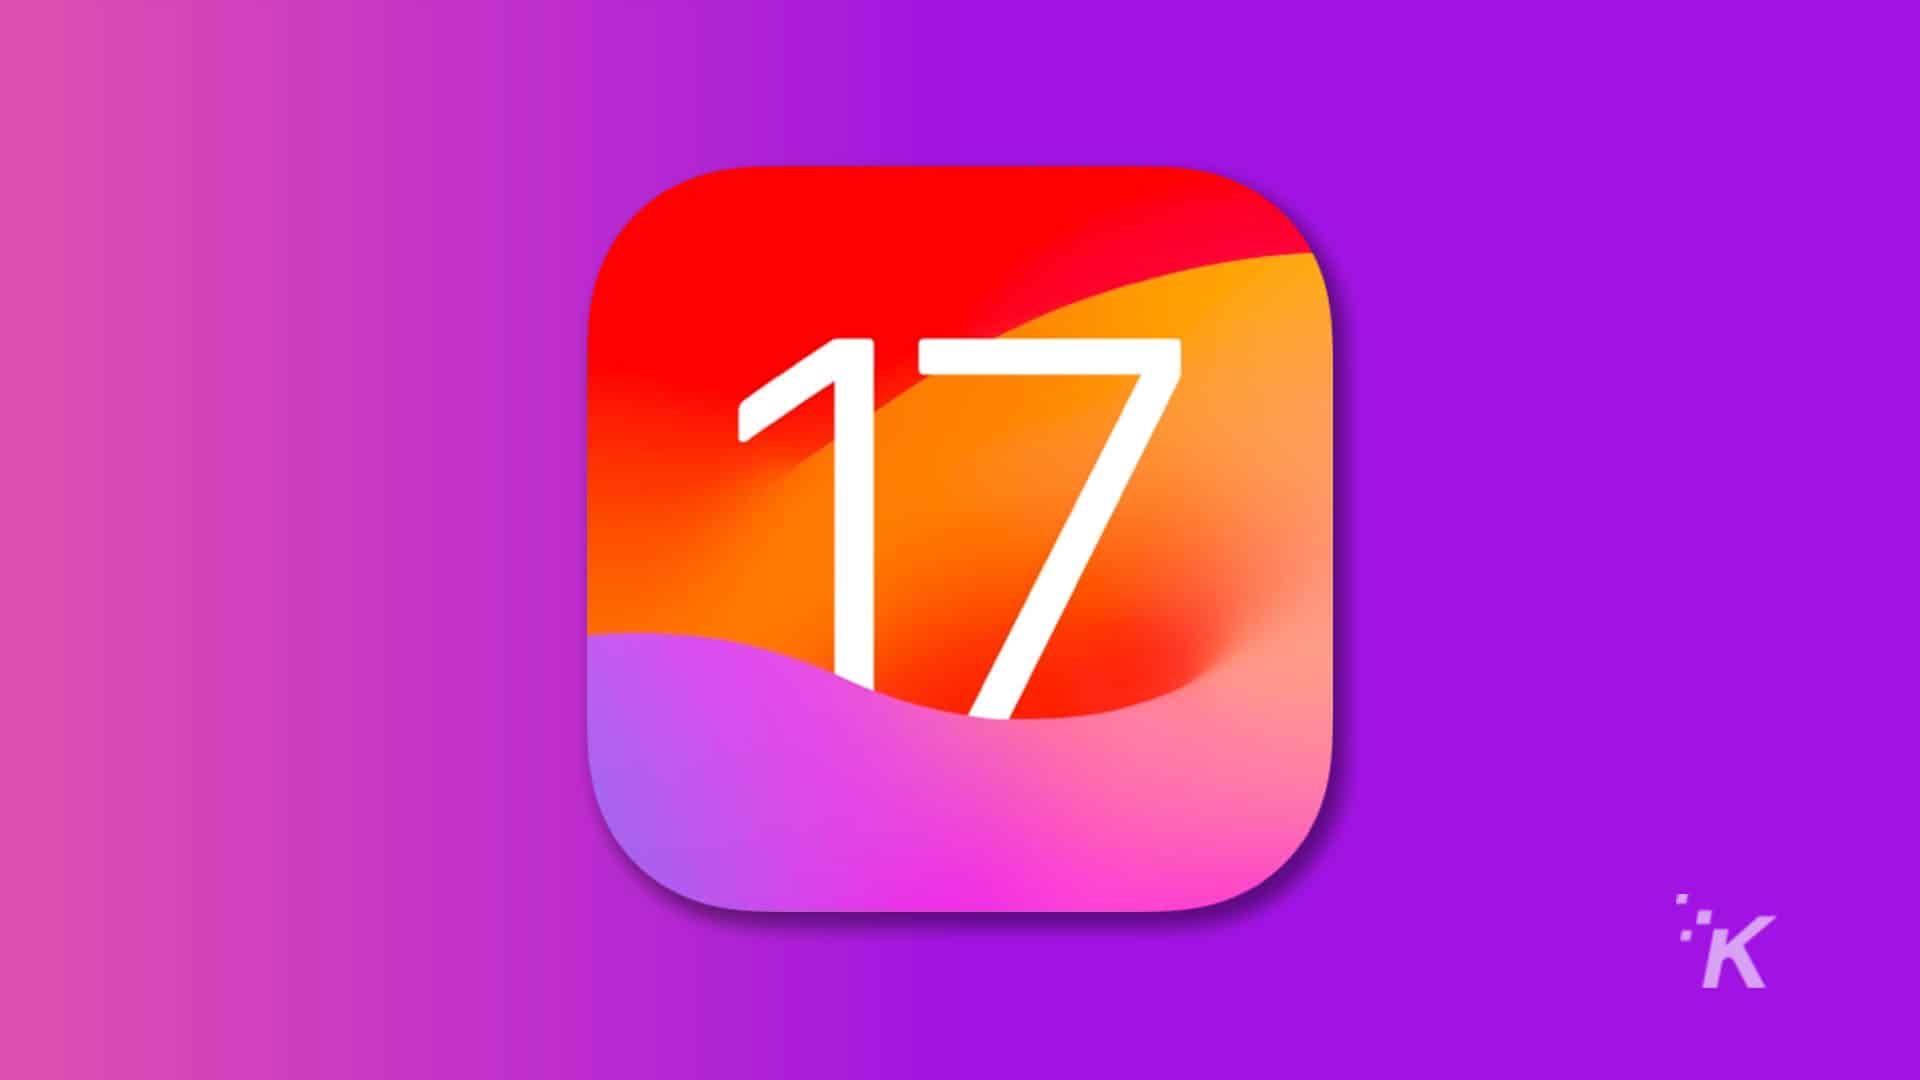 iOS 17 logo in purple background